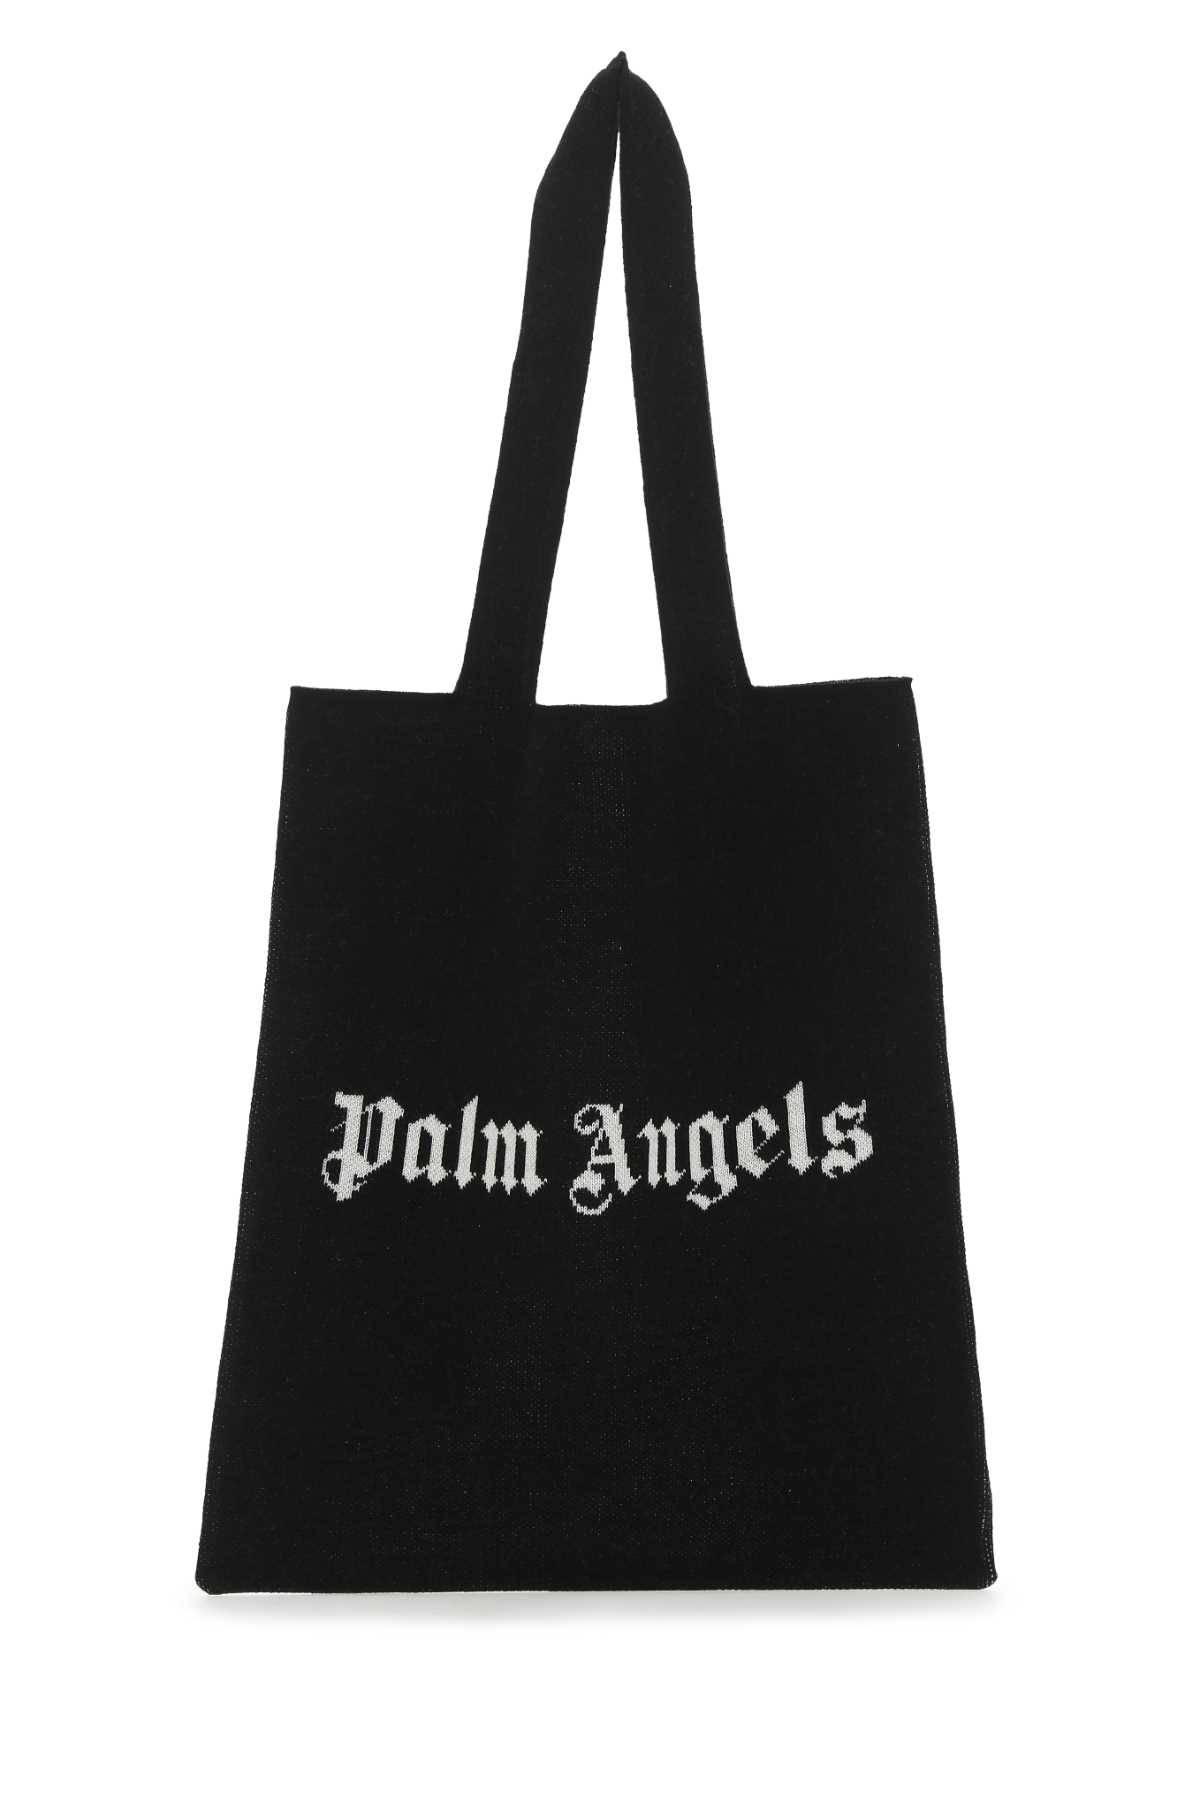 Palm Angels Black Wool Blend Shopping Bag